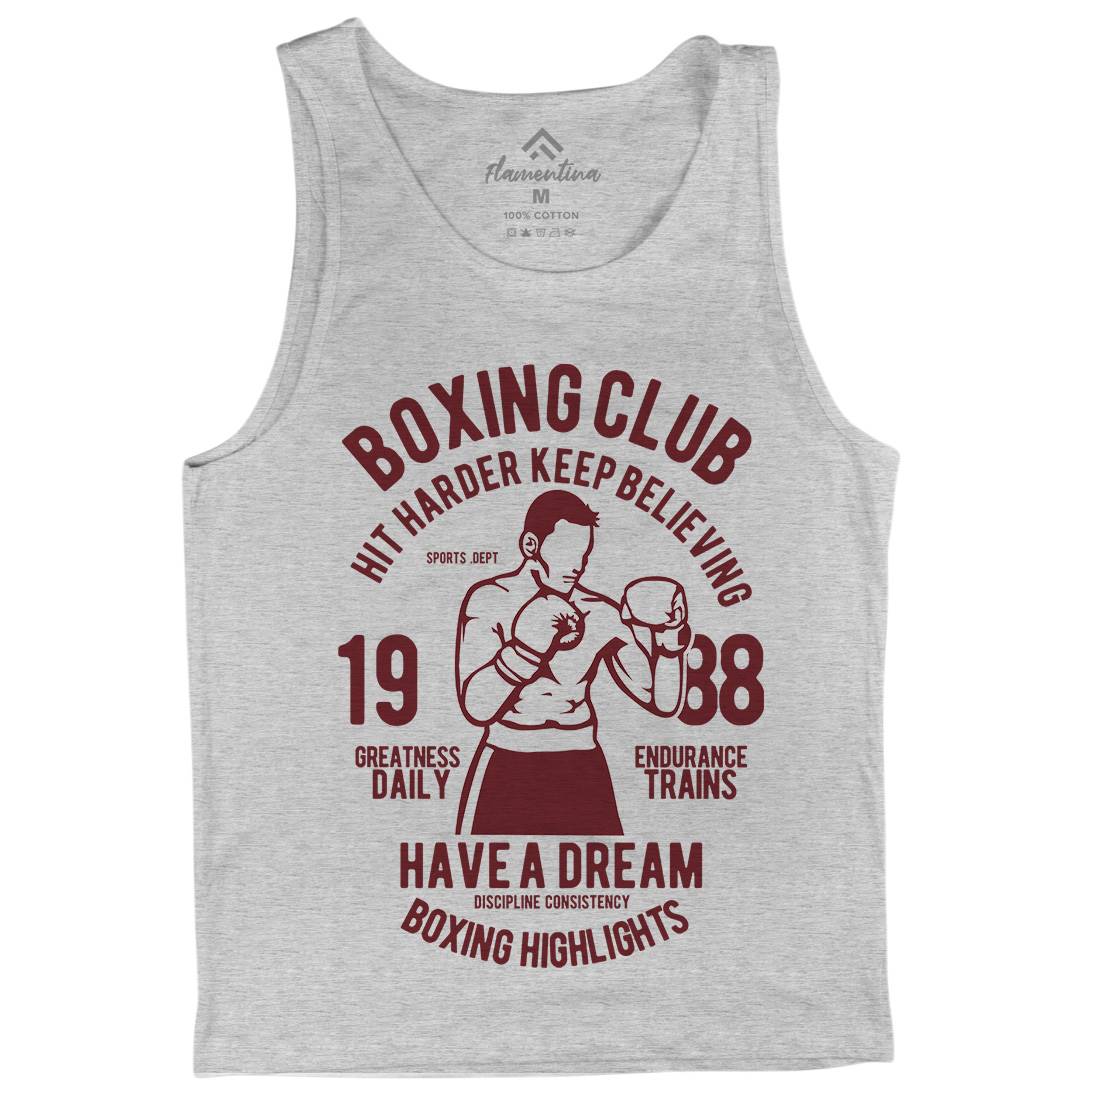 Boxing Club Mens Tank Top Vest Sport B186